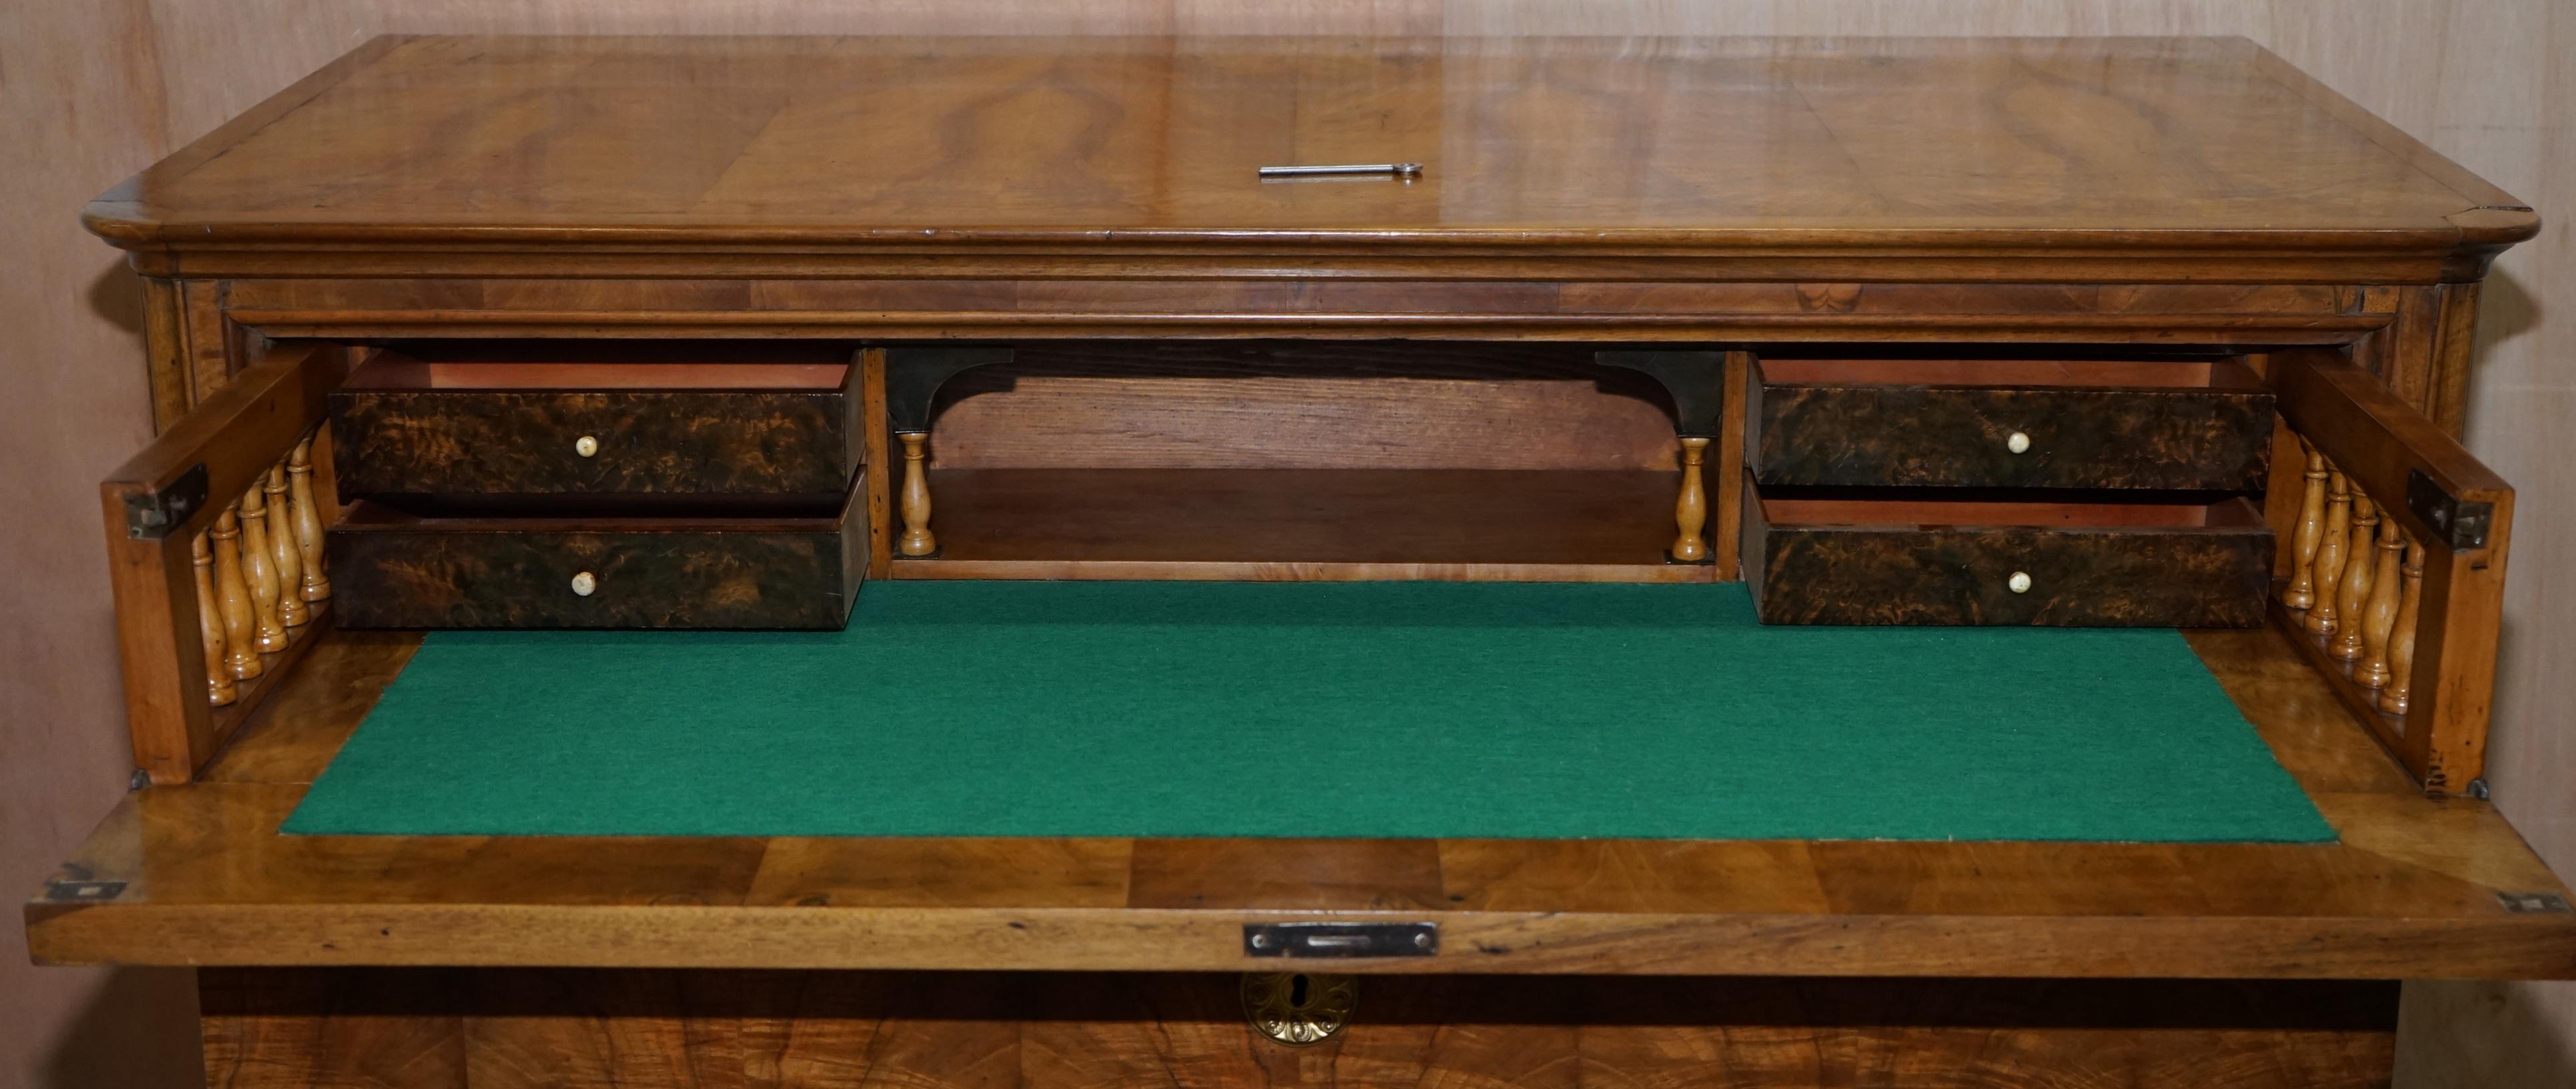 Huge 19th Century Walnut Biedermeier Chest of Drawers Drop Front Desk Secretaire 14